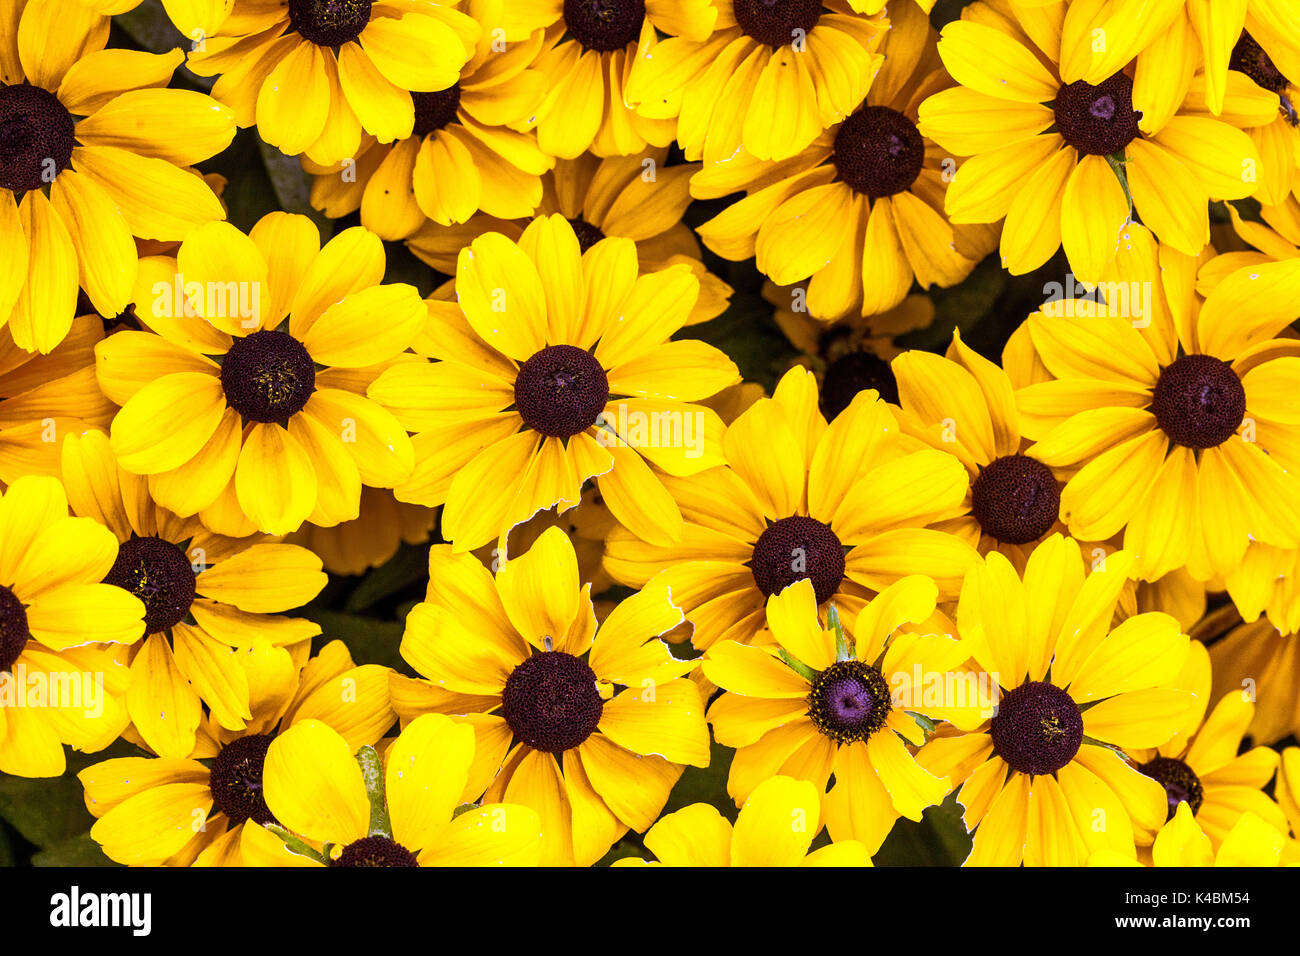 Rudbeckia hirta 'Toto Gold' flowers Stock Photo - Alamy